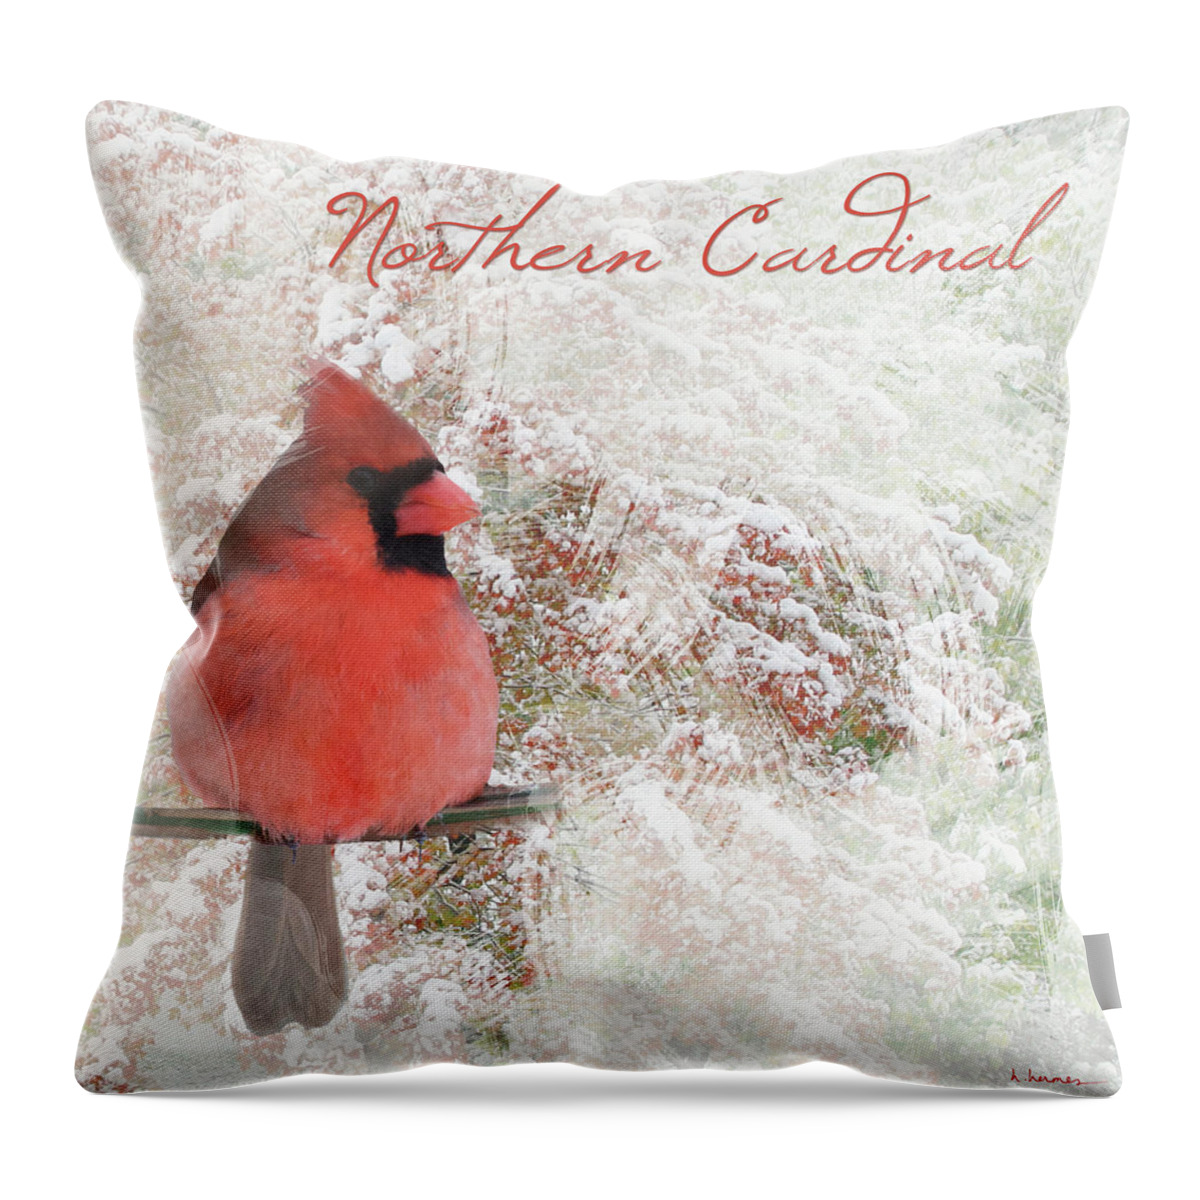 Cardinal Throw Pillow featuring the photograph Watercolor Northern Cardinal Photograph by Hermes Fine Art